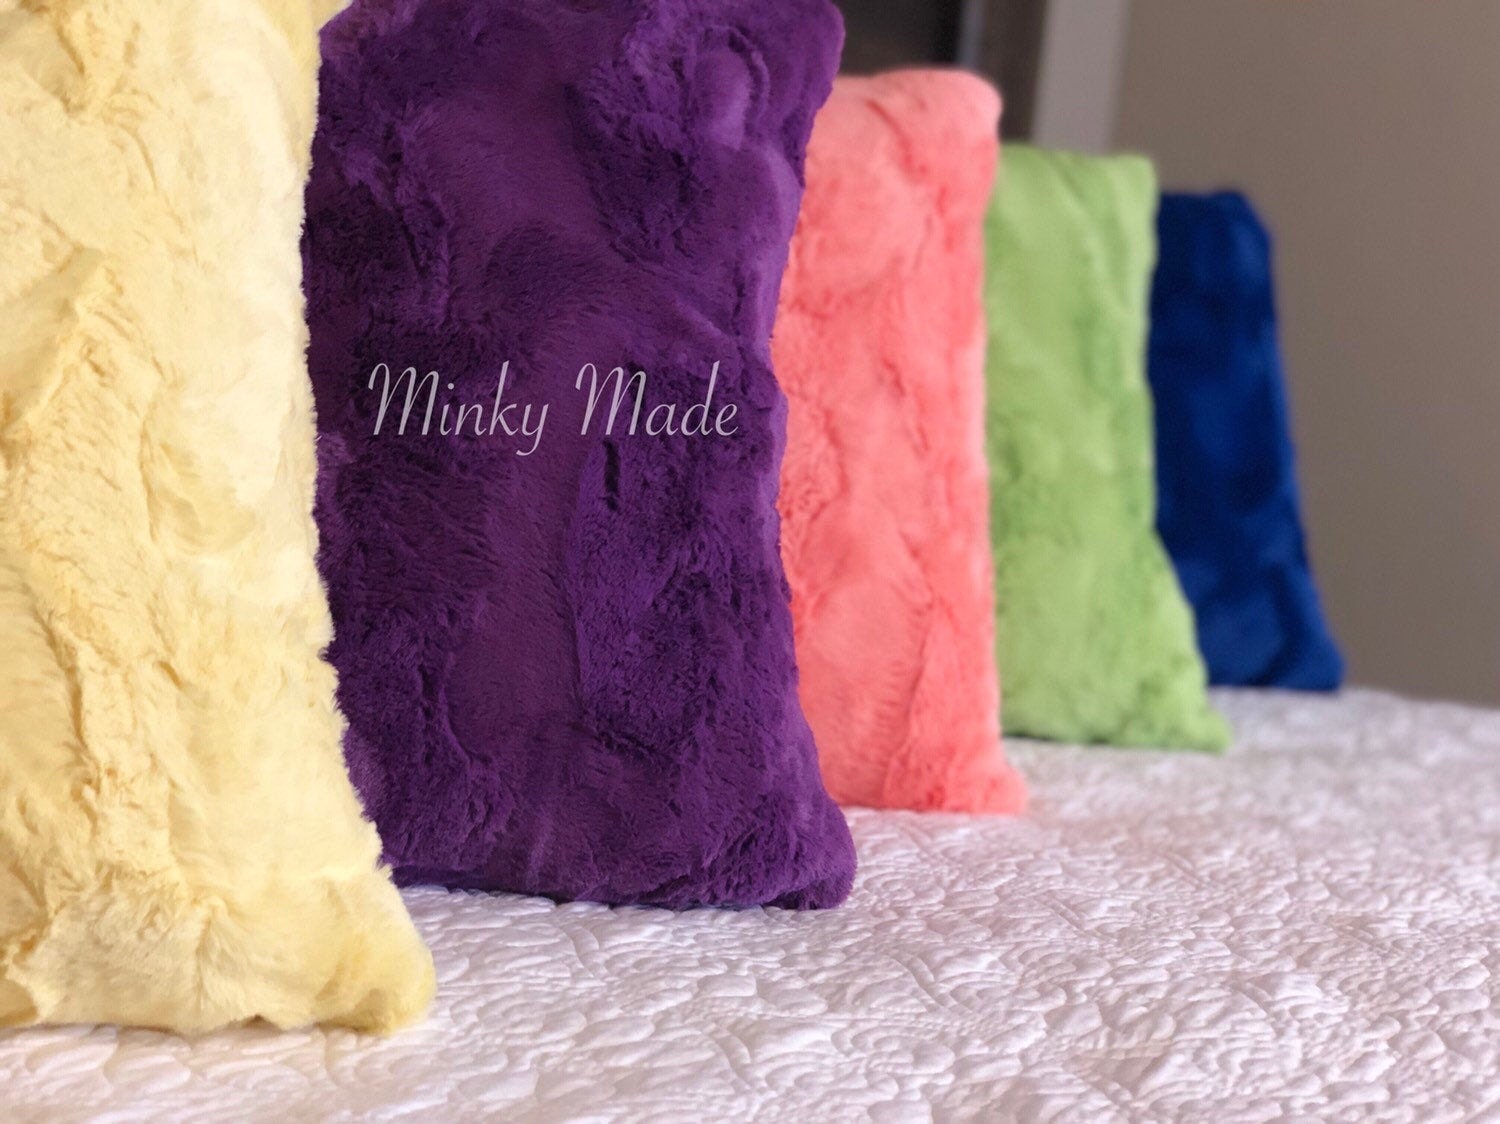 2pcs Soft Faux Fur Fluffy Pillows For Girls Room Decor Tie Dye Decorative  Pillow Covers